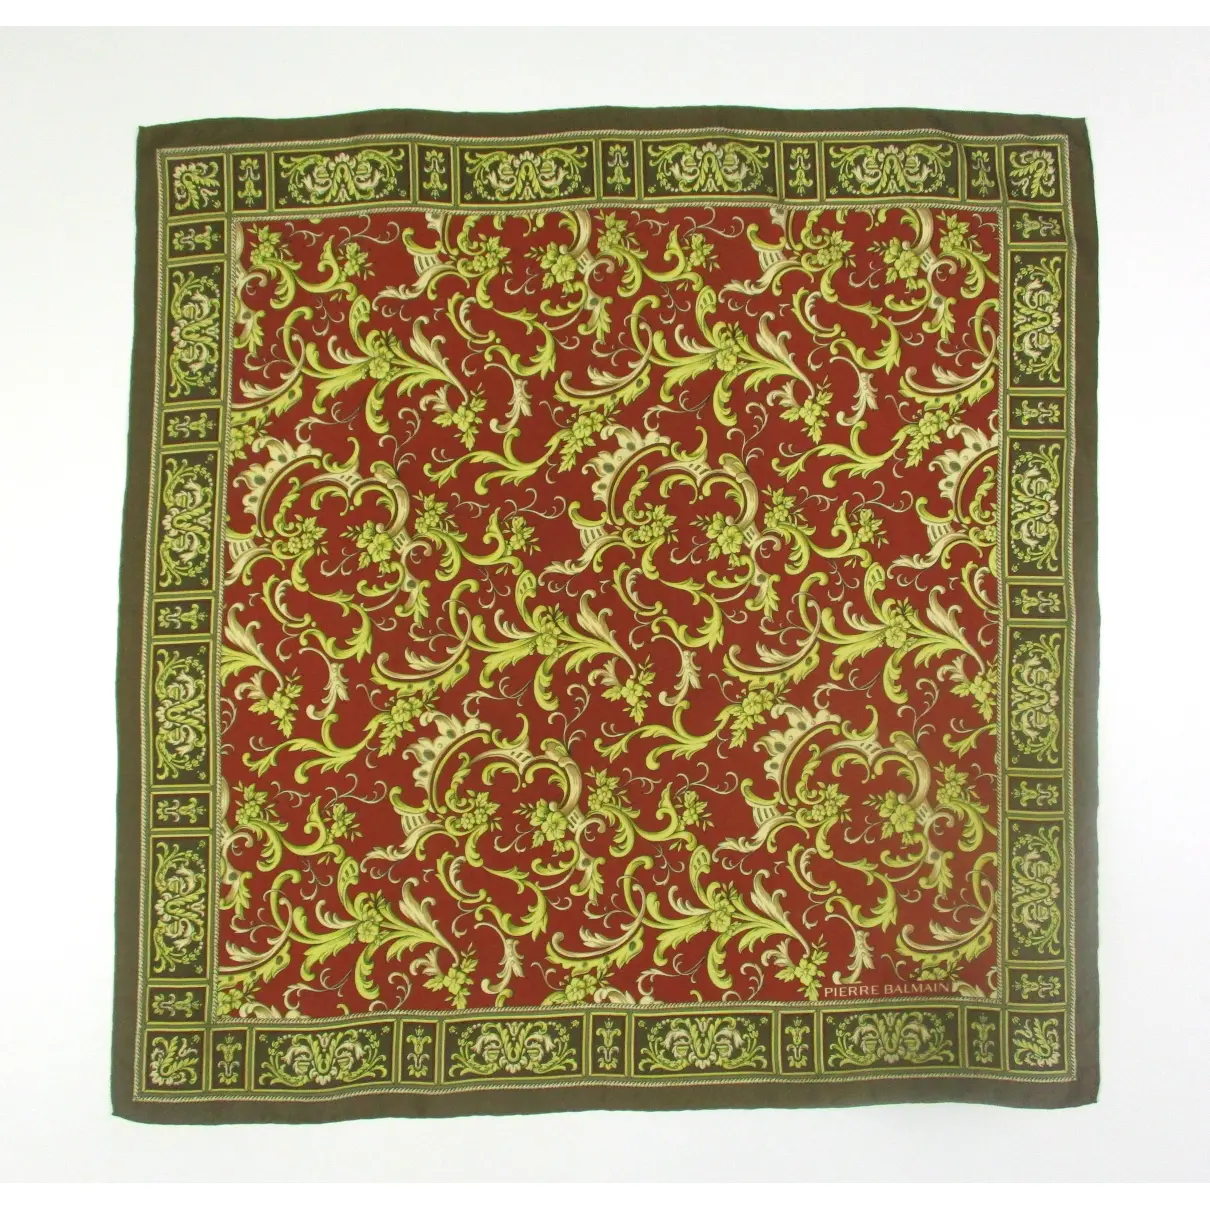 Buy Pierre Balmain Silk neckerchief online - Vintage